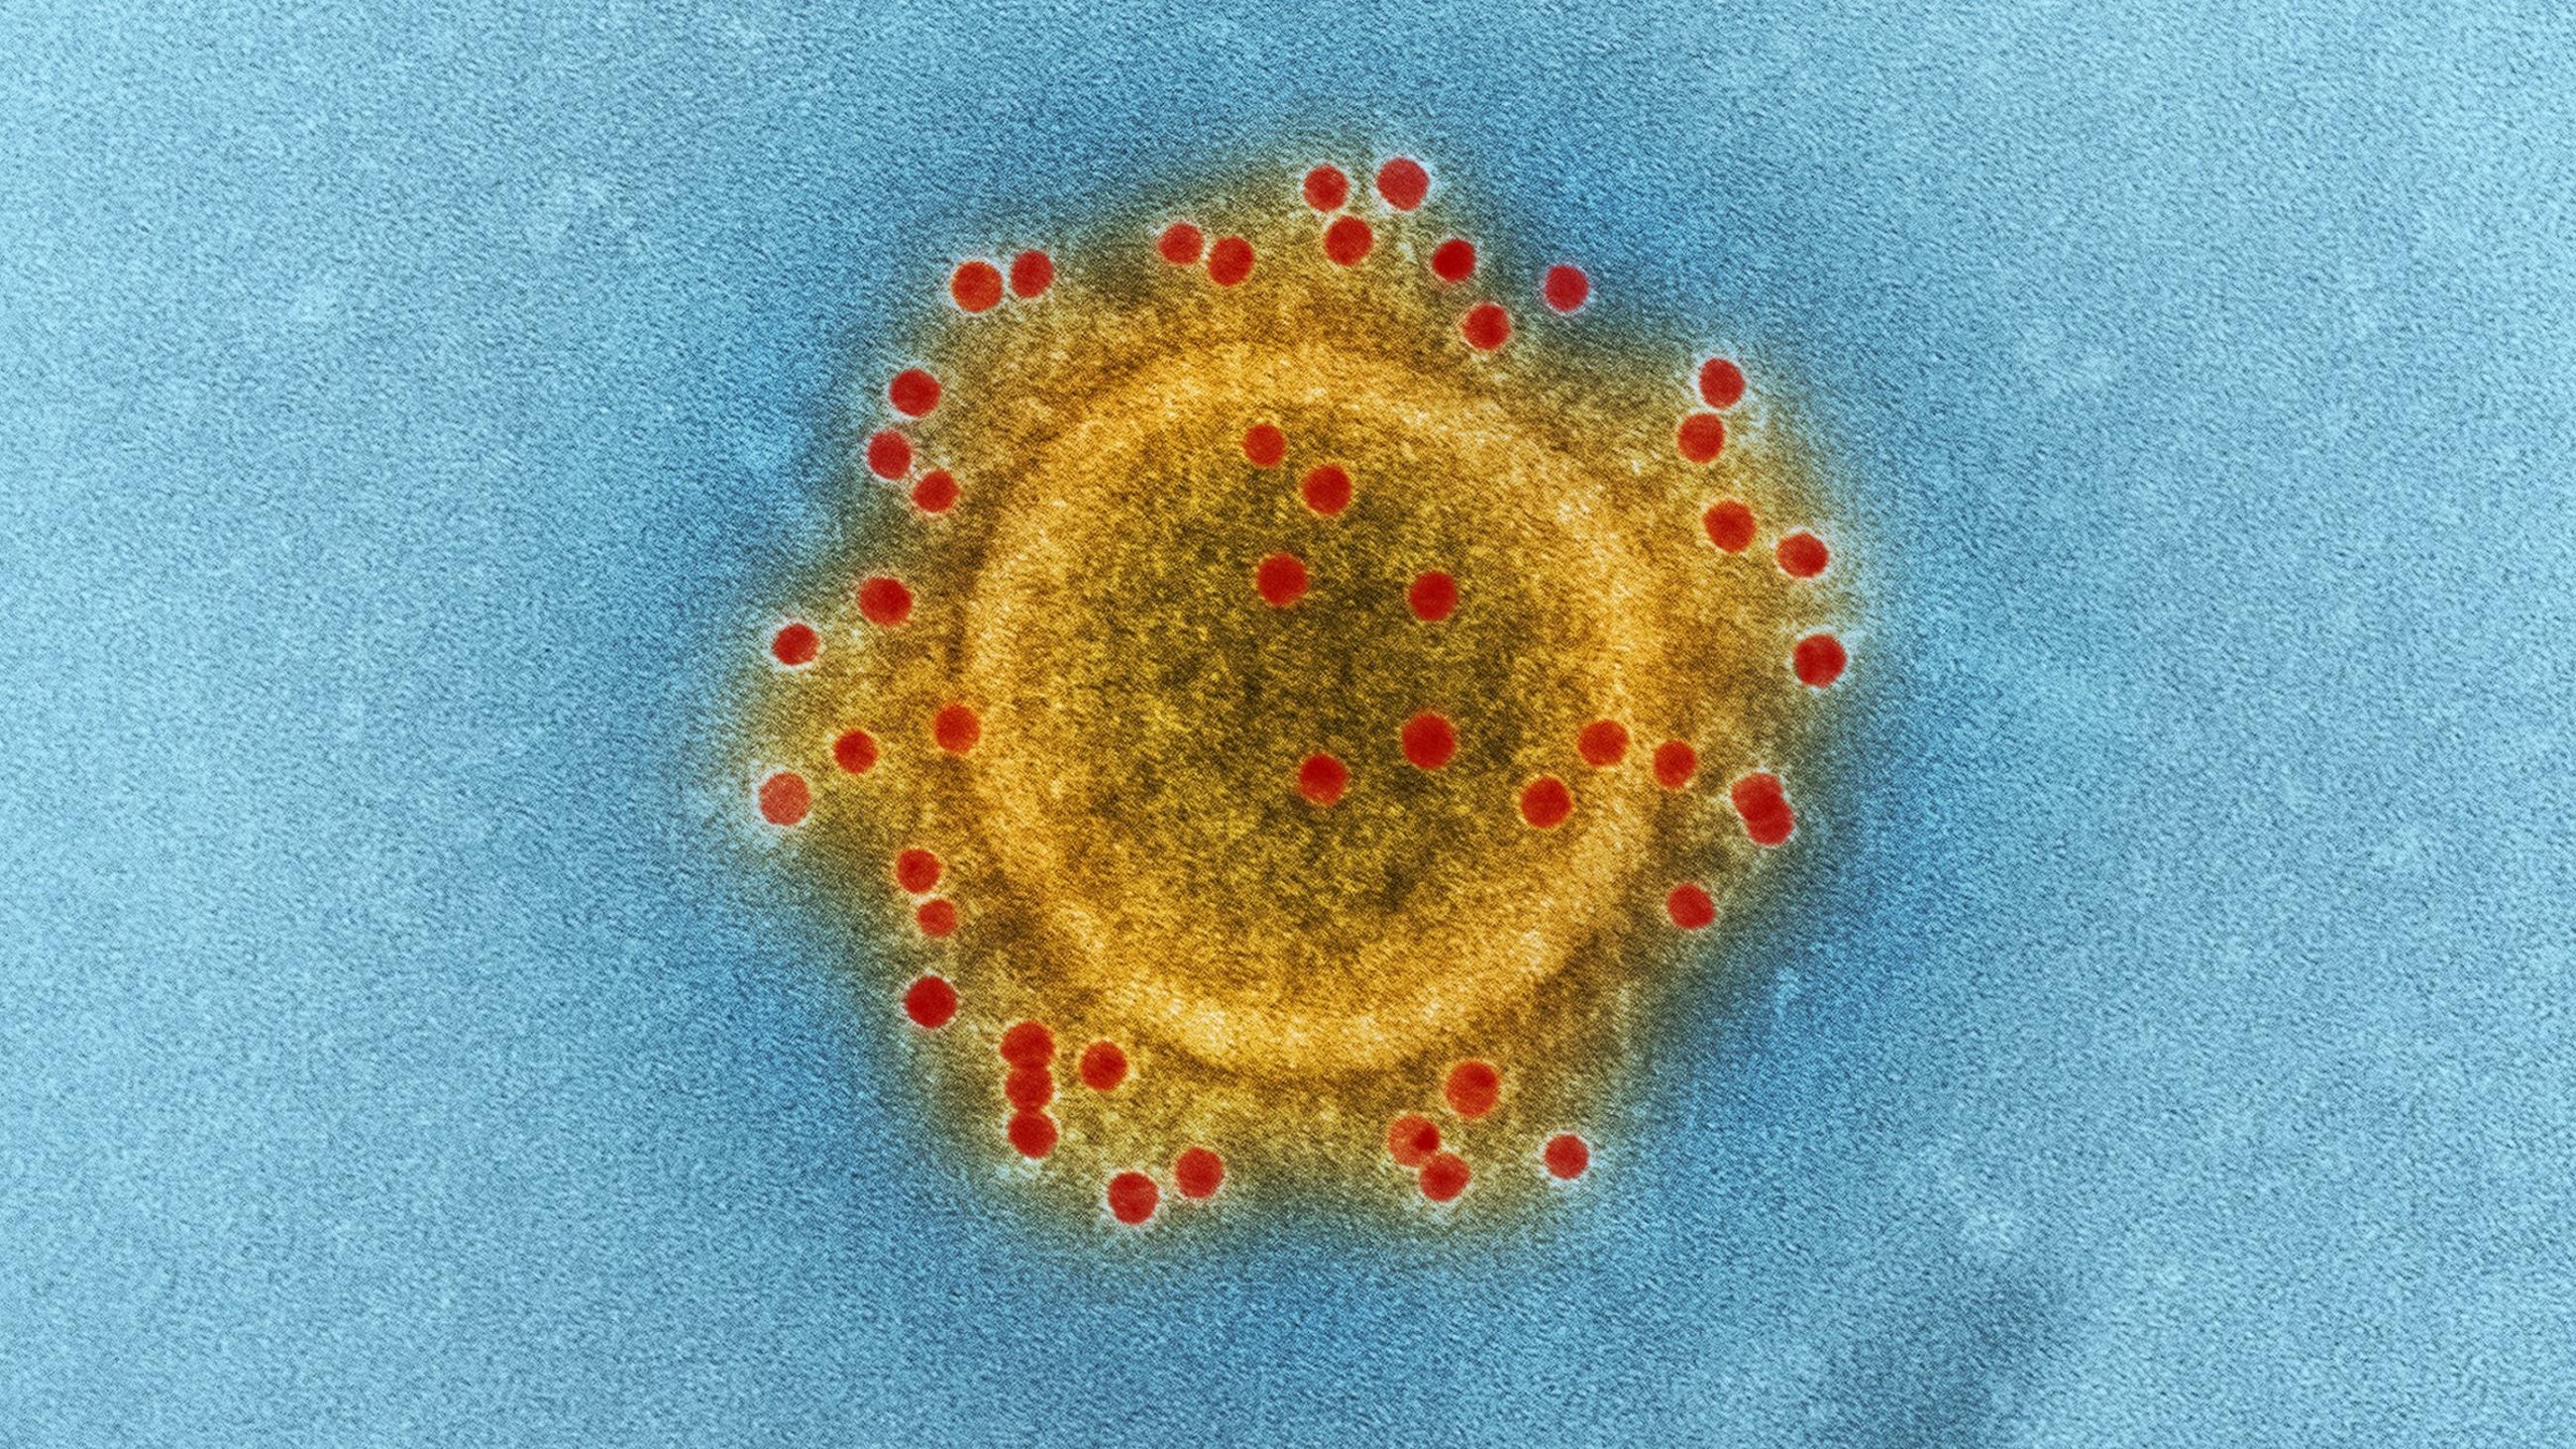 A stylised image of a coronavirus